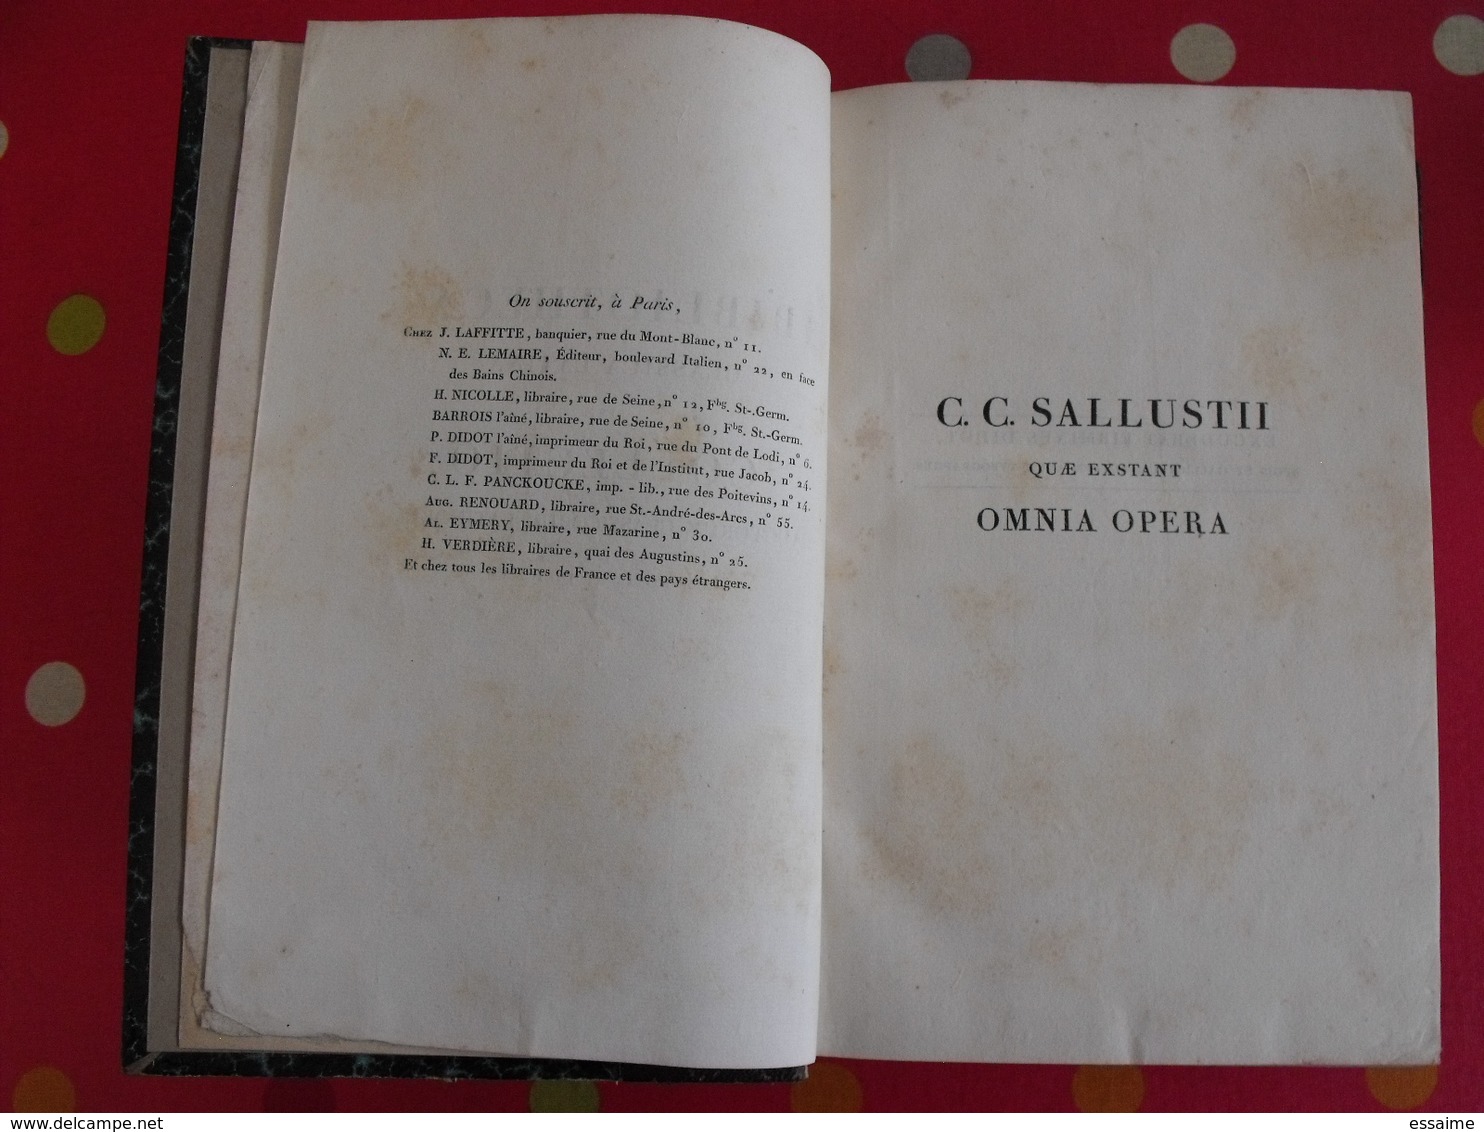 Caius Crispus Sallustius. JL Burnouf. Lemaire 1821. En Latin. Salluste. Catalina Jugurtha  Opera Sallustii. Firmin Didot - 1801-1900